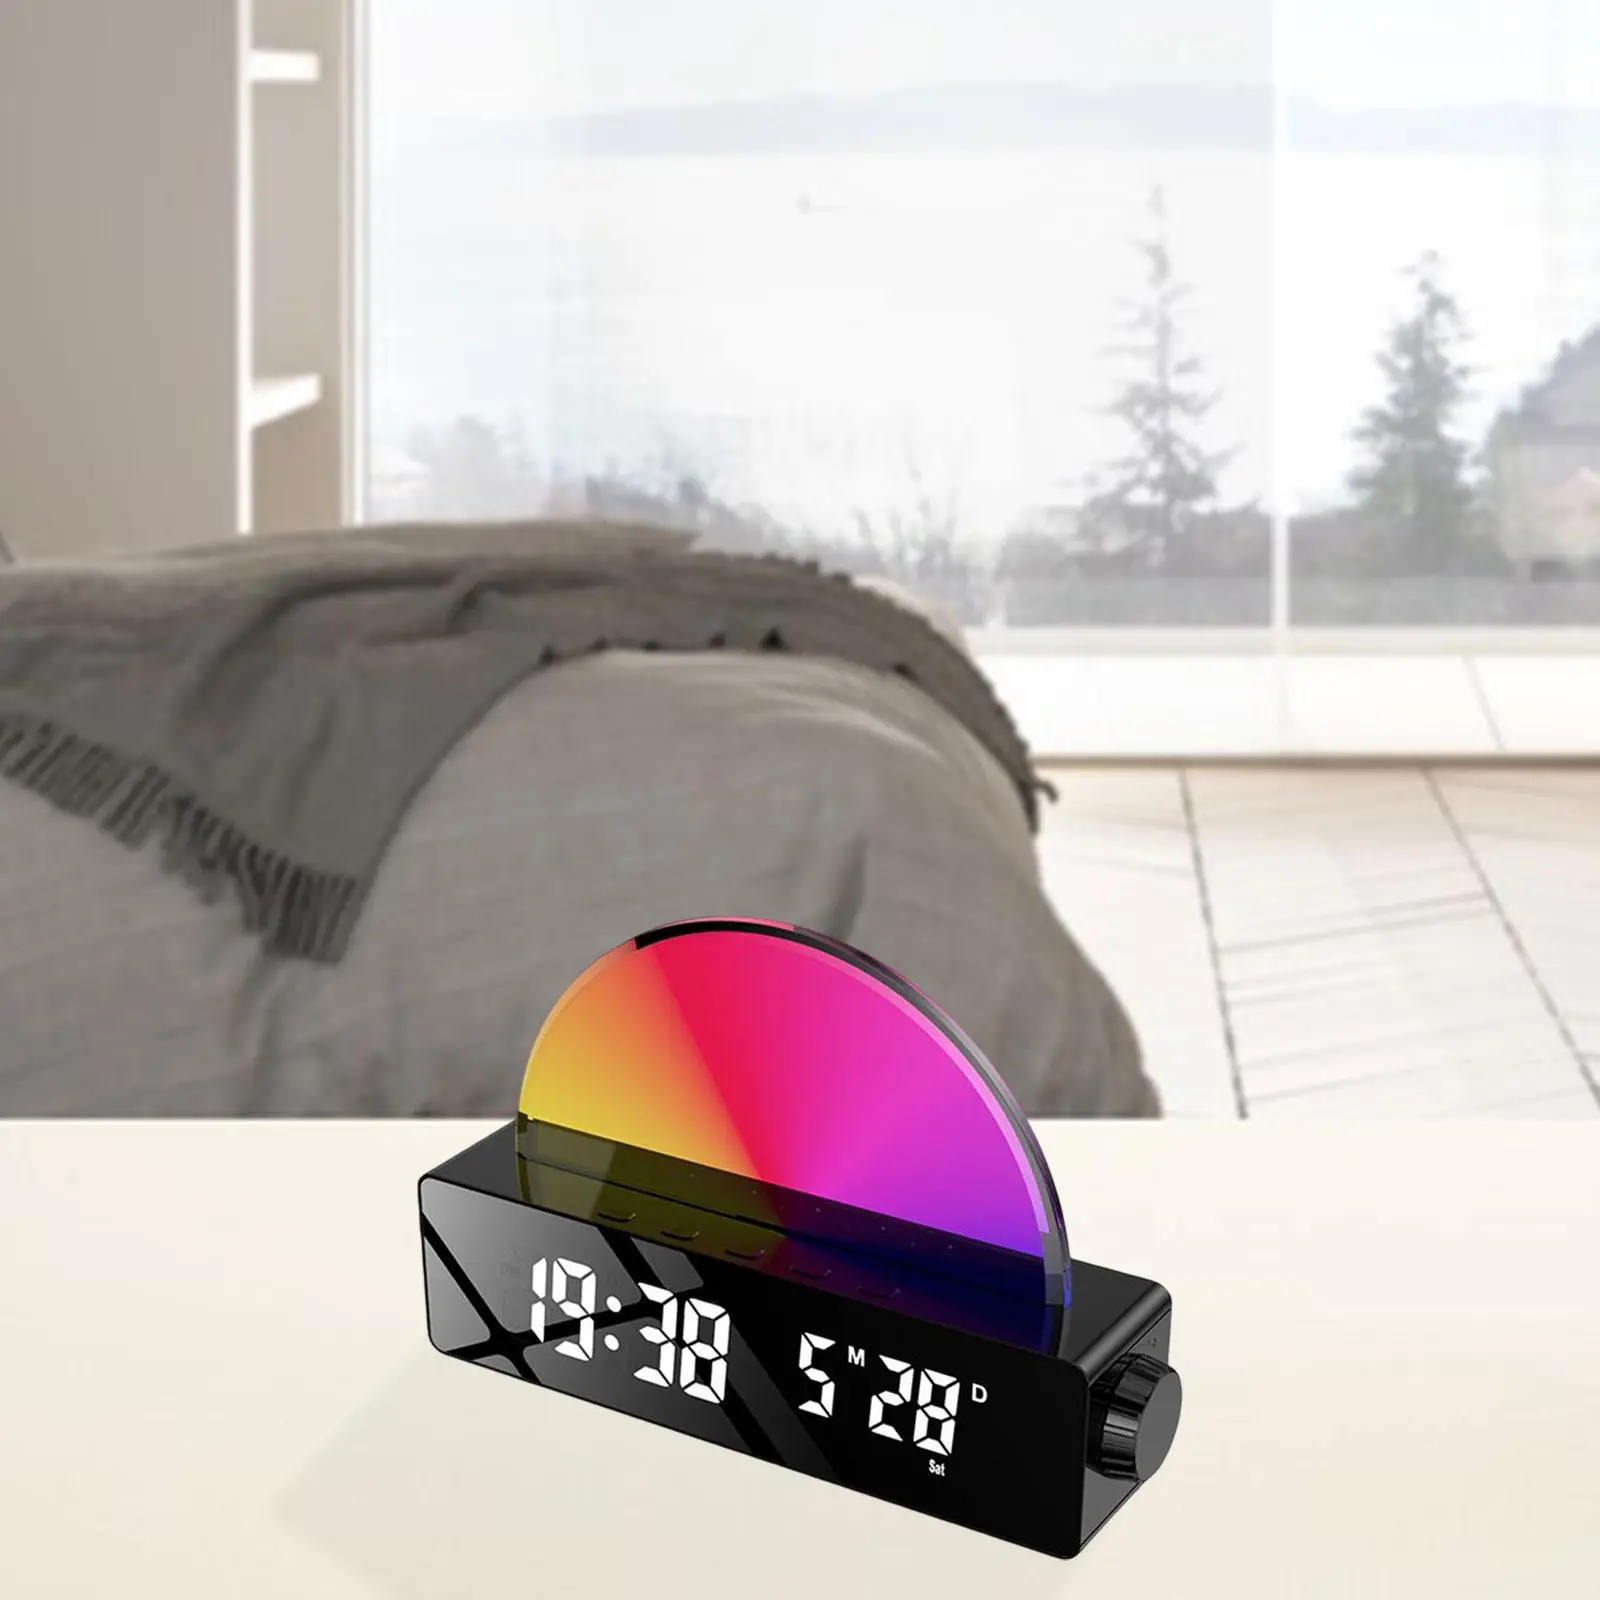 Multifunctional Digital Alarm Clock Large Display Temperature Meter Adjustable RGB Calendar Desktop Clock for Office Kitchen